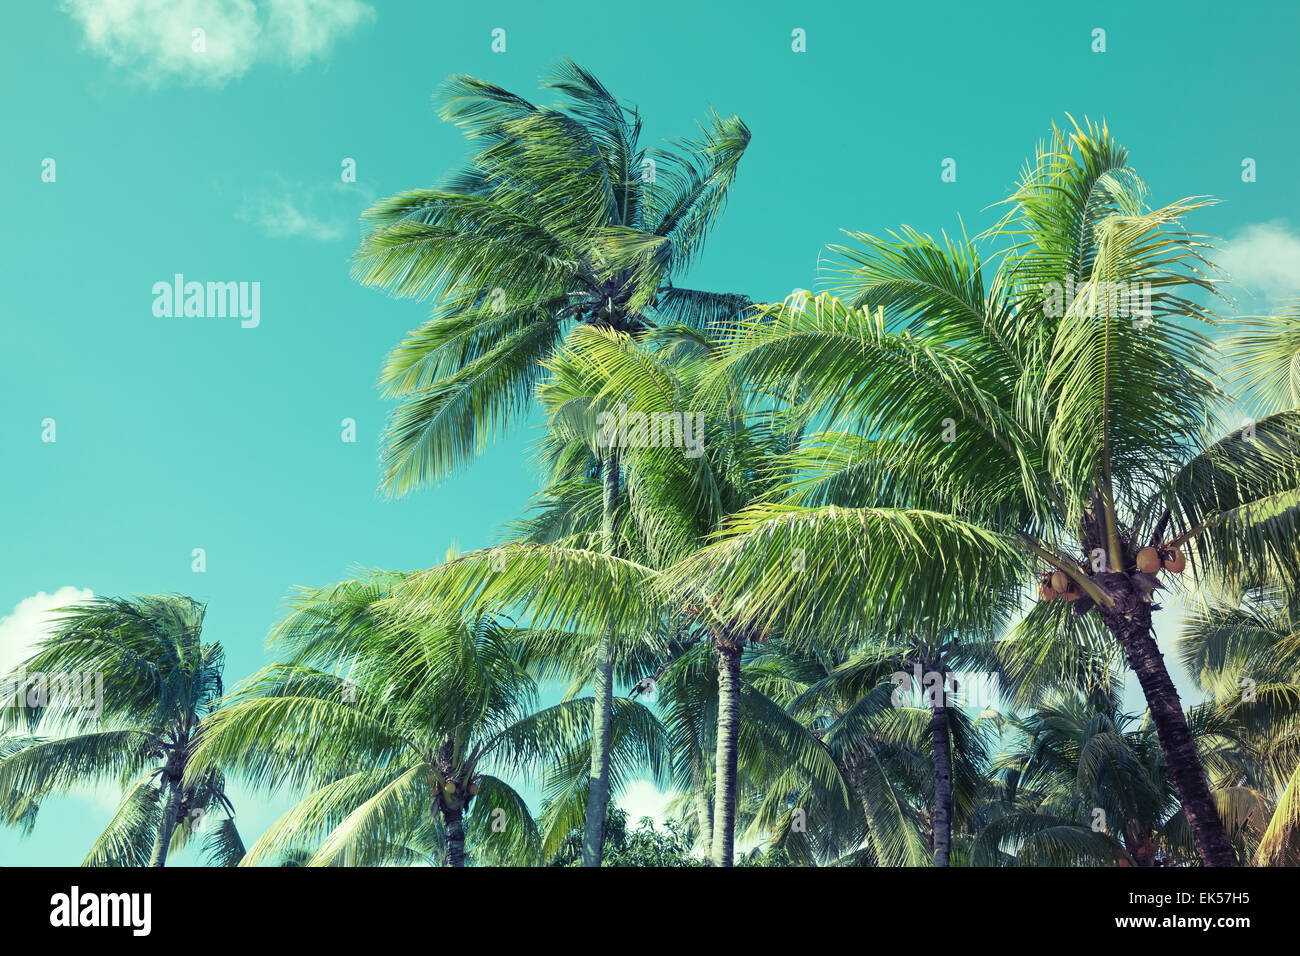 Palmen über bewölktem Himmelshintergrund. Vintage-Stil. Foto mit blau getönten Instagram-Filter-Effekt Stockfoto